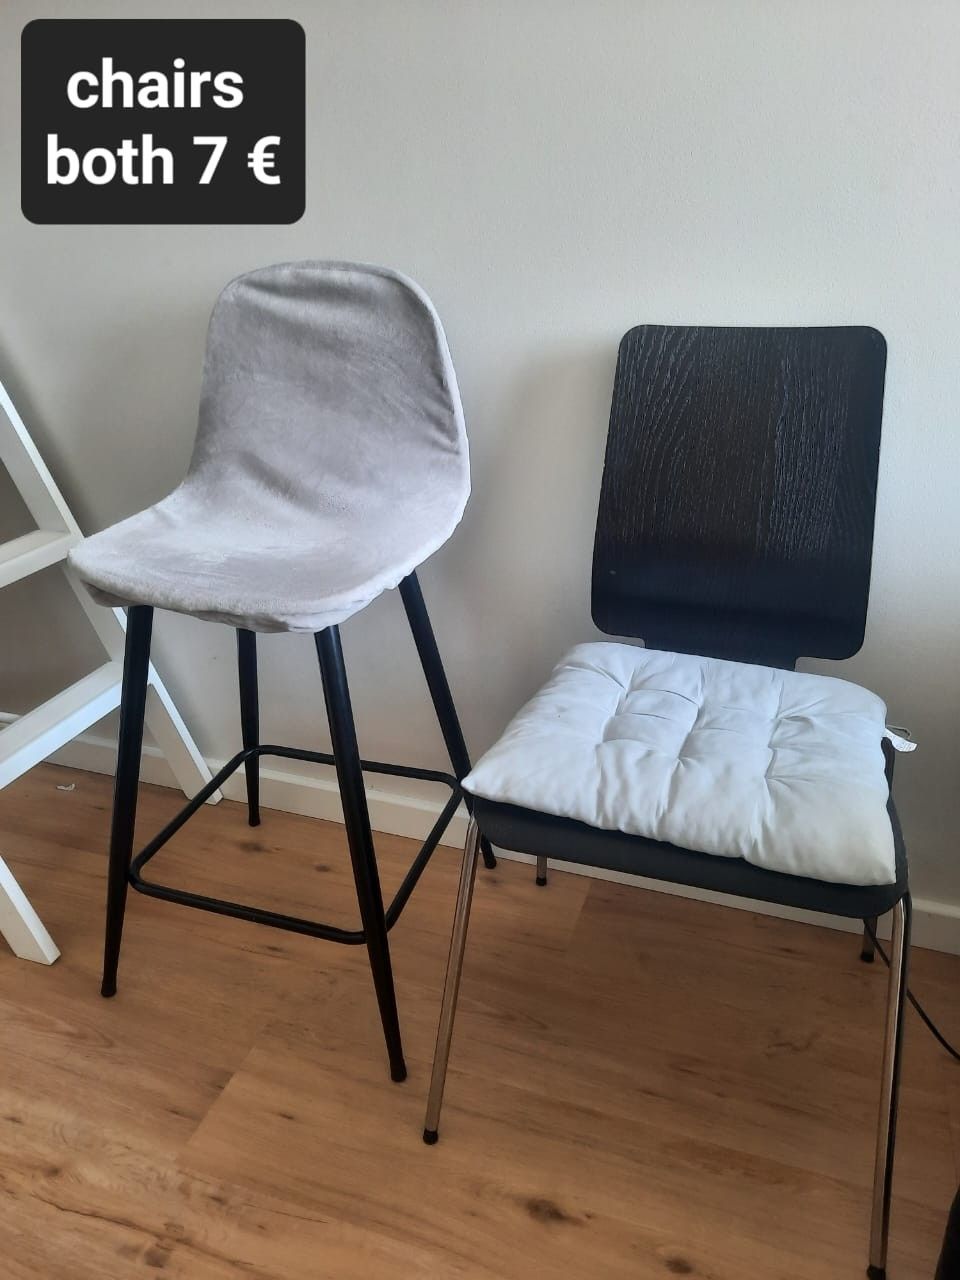 Kaksi tuolia 7€